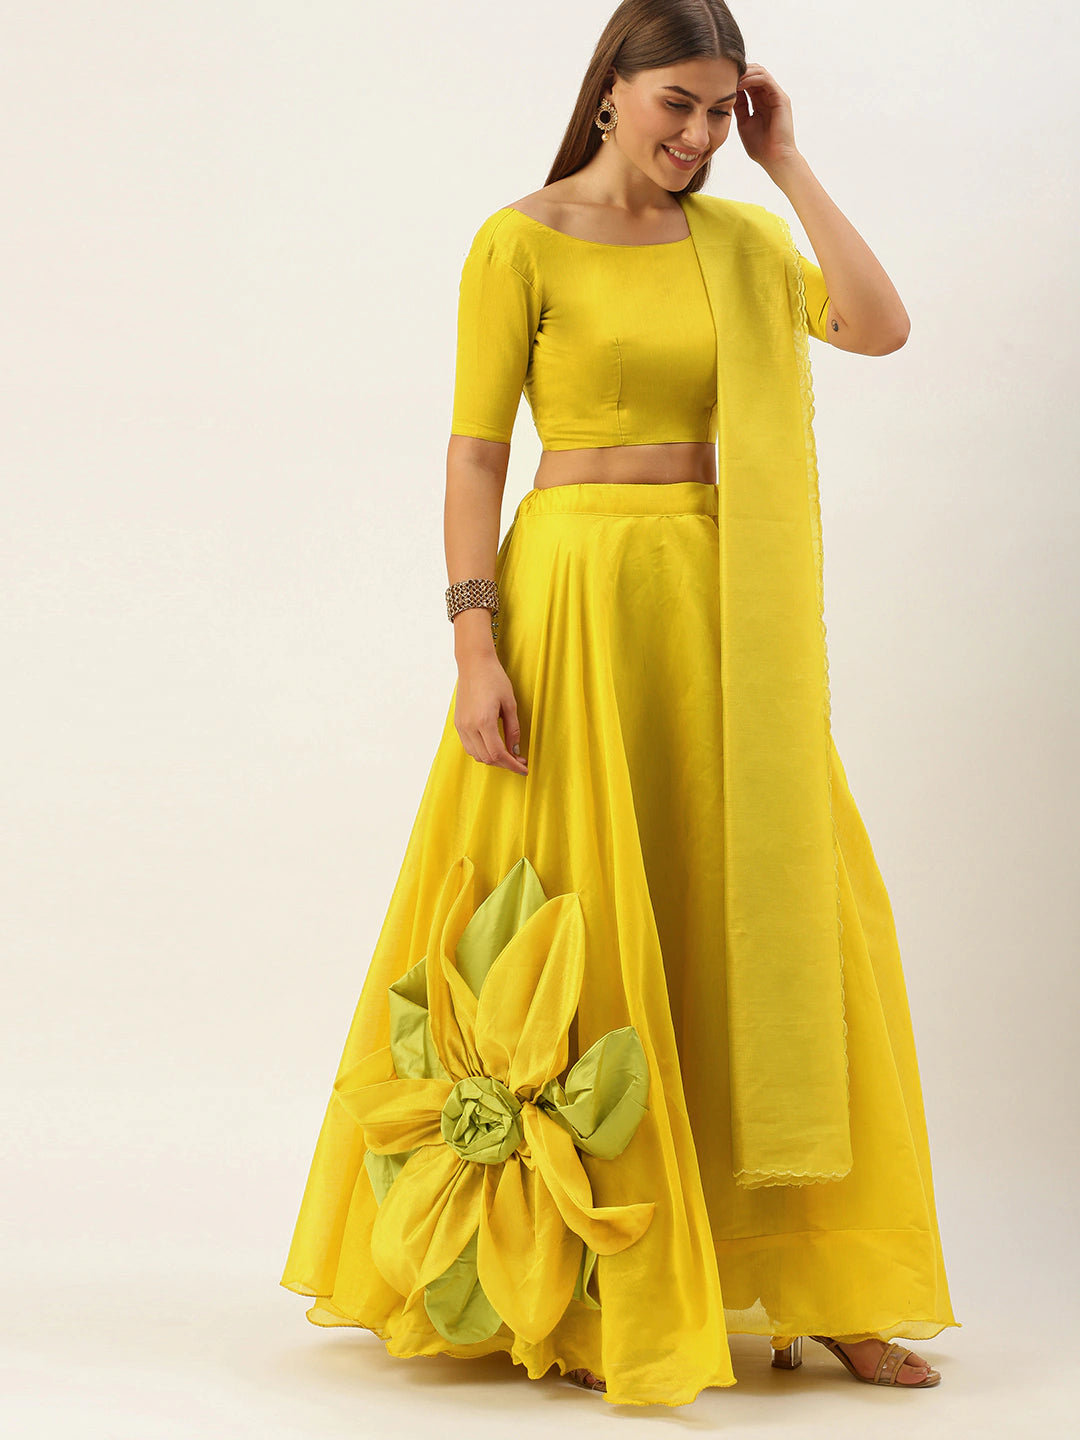 Top 151+ yellow lehenga saree latest